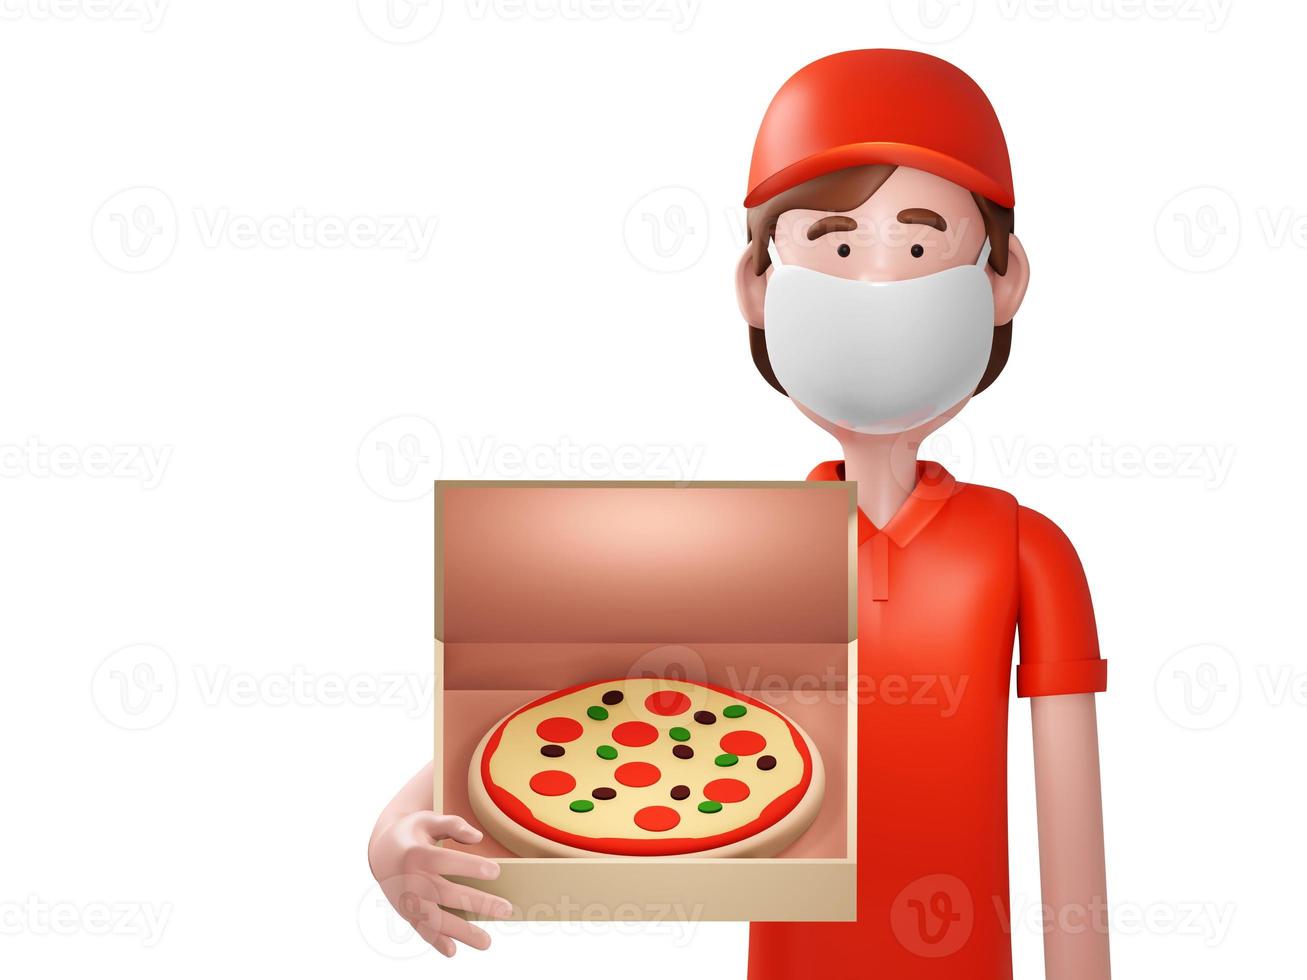 correio de entrega de pizza com máscara segurando a caixa com pizza, 3d render foto